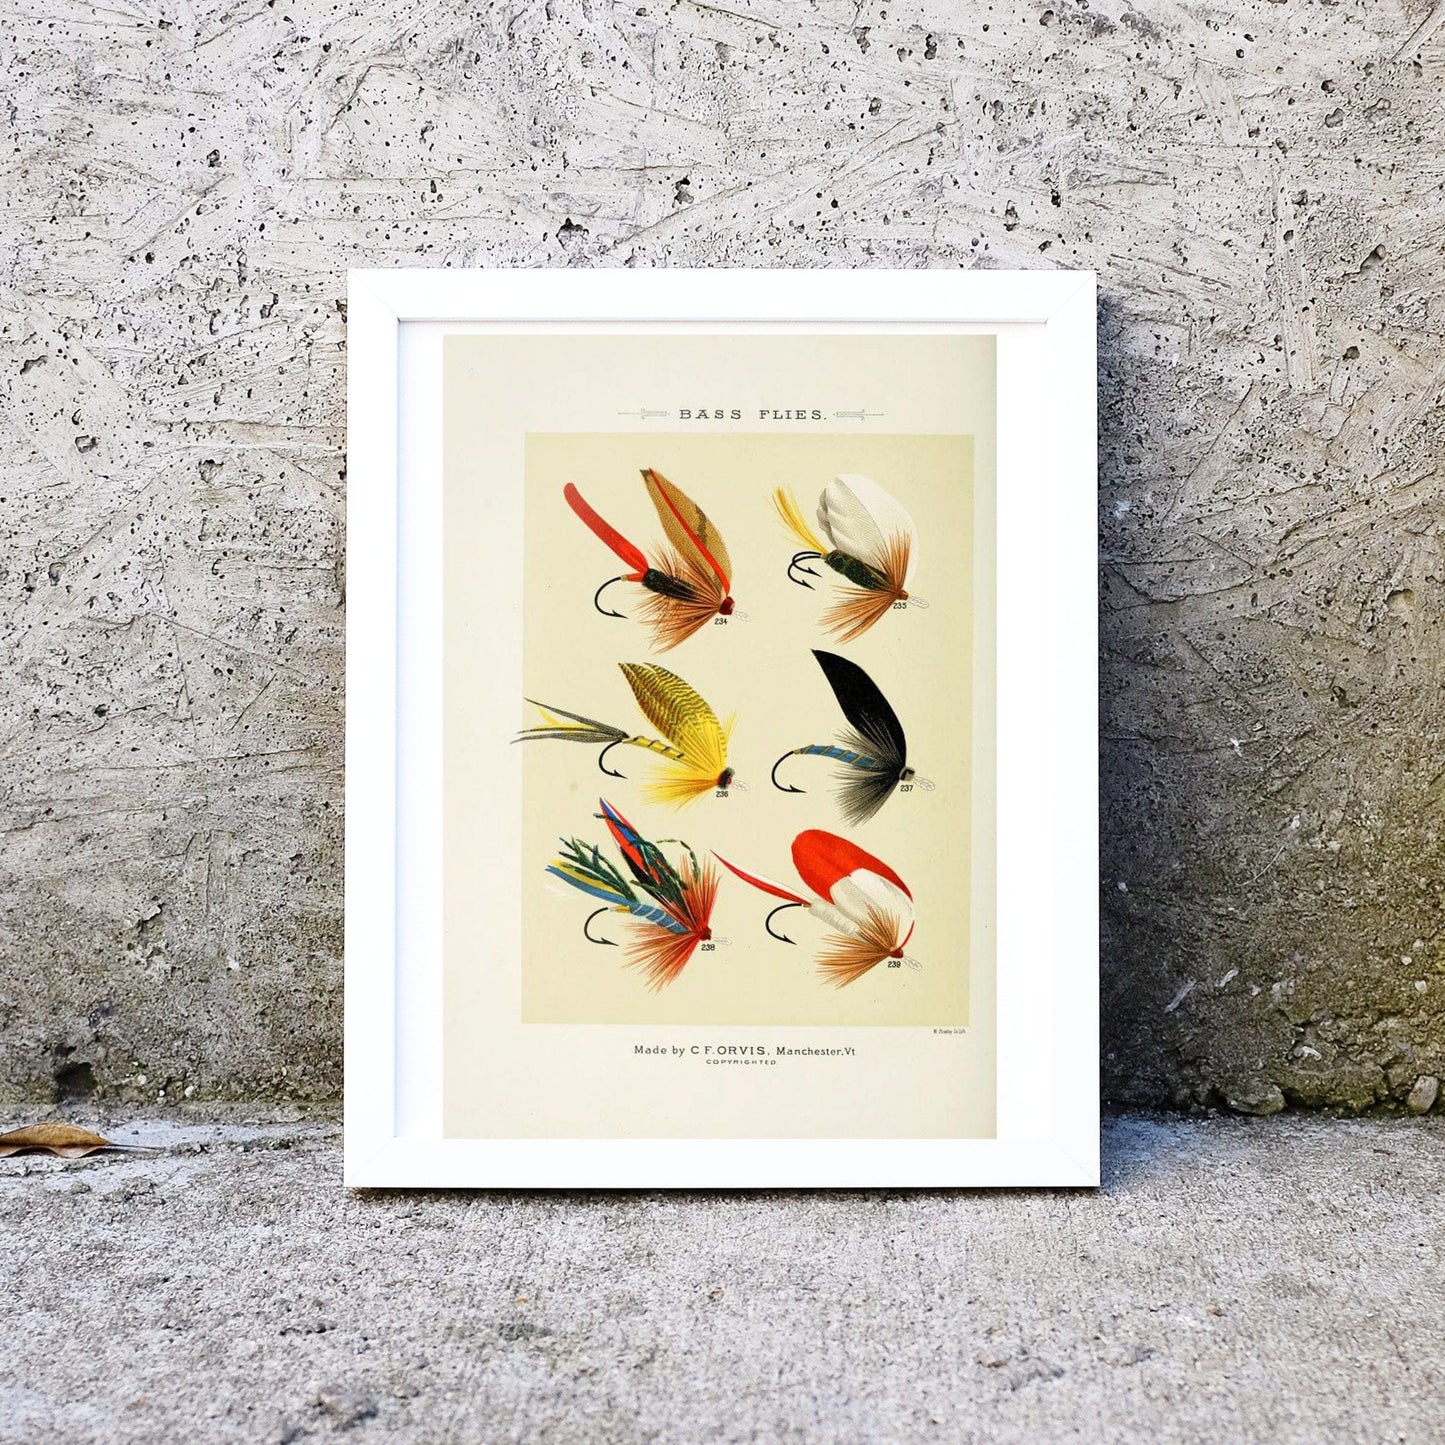 Framed Antique Fishing Bass Flies Print-Sporting fishing lure vintage prints